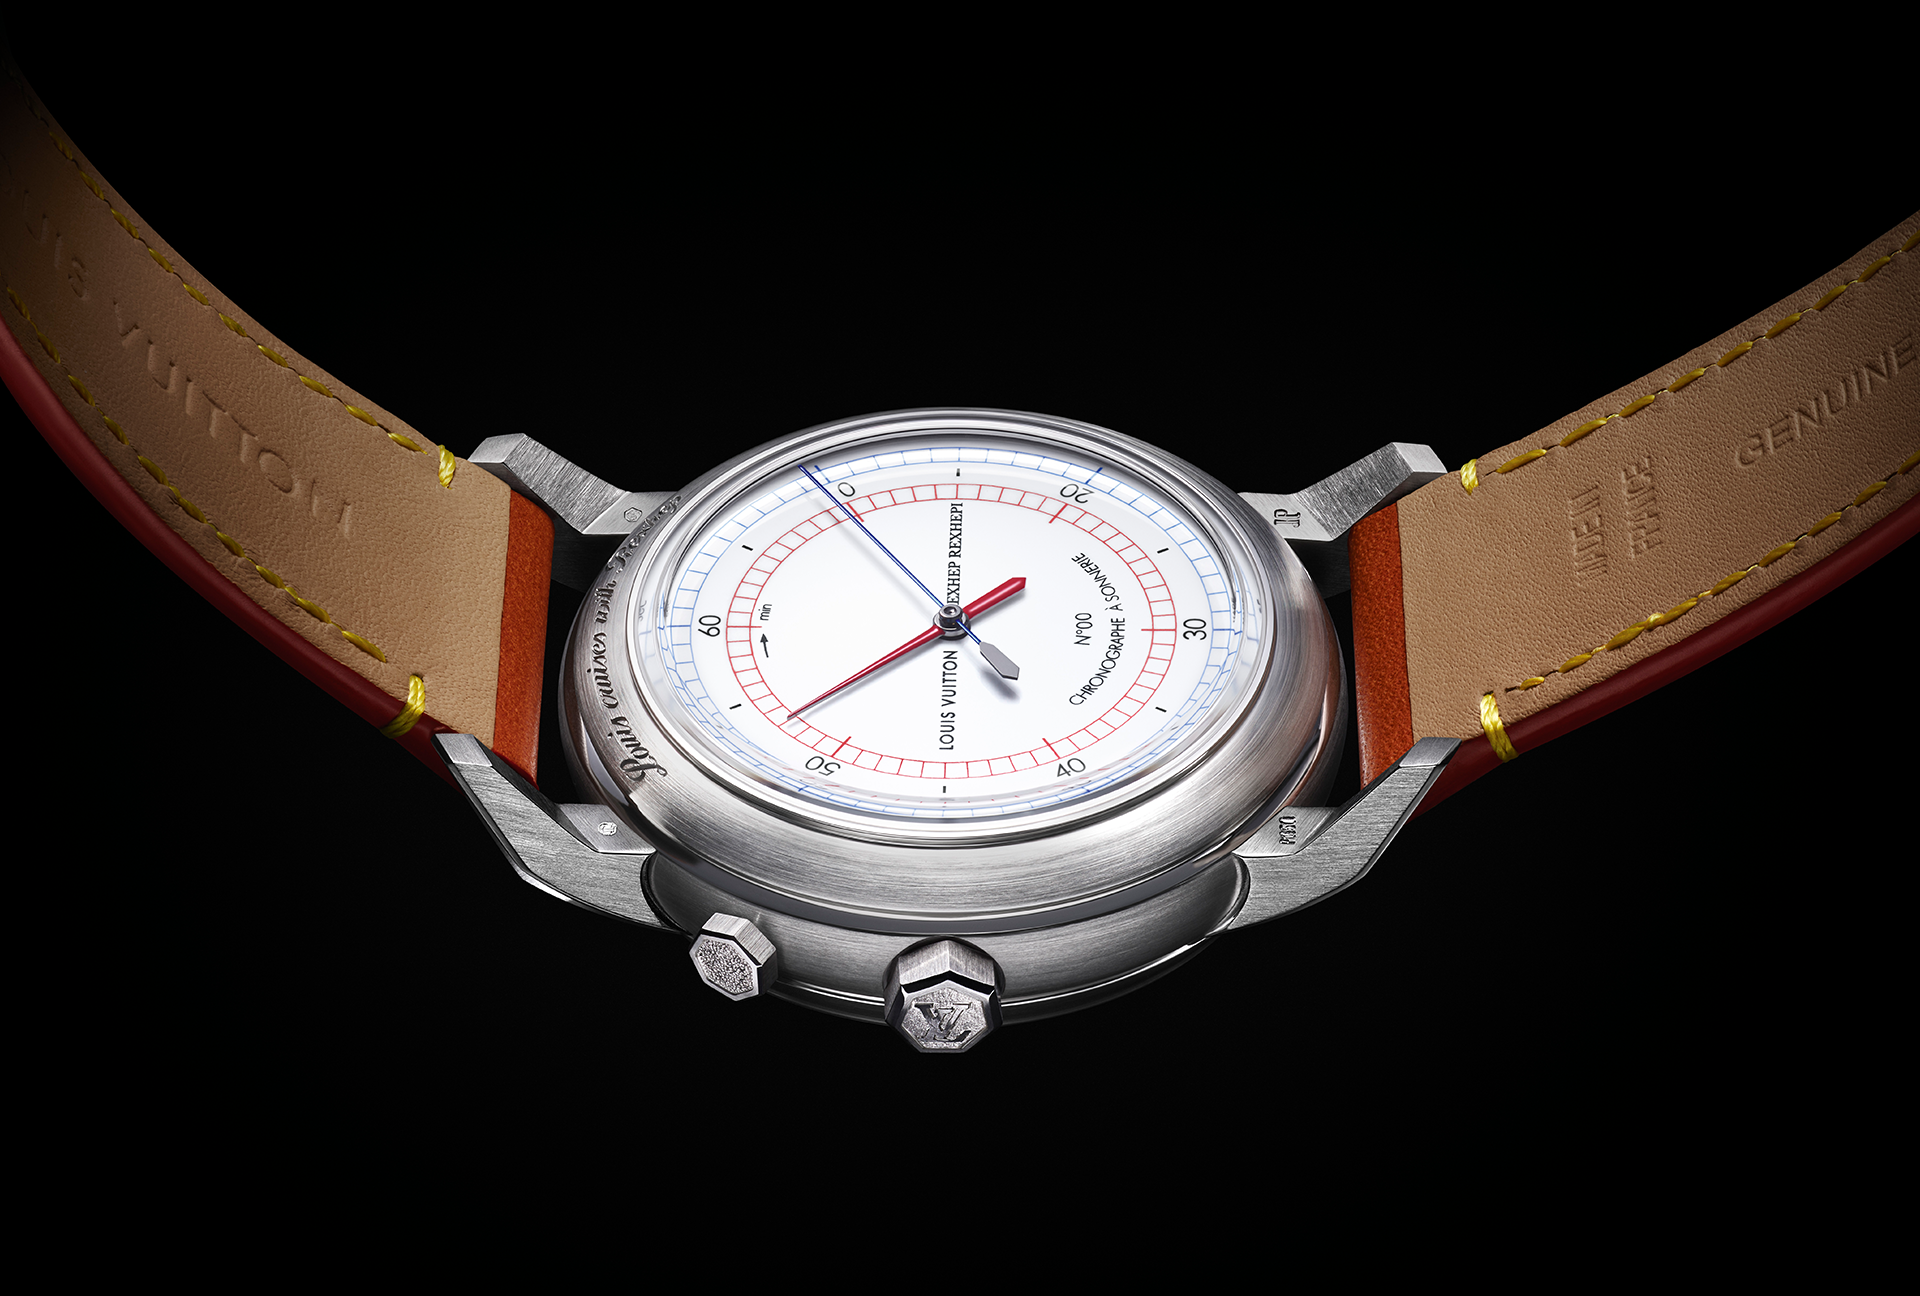 Authentic Louis Vuitton Watch Box Watch Case Brand New